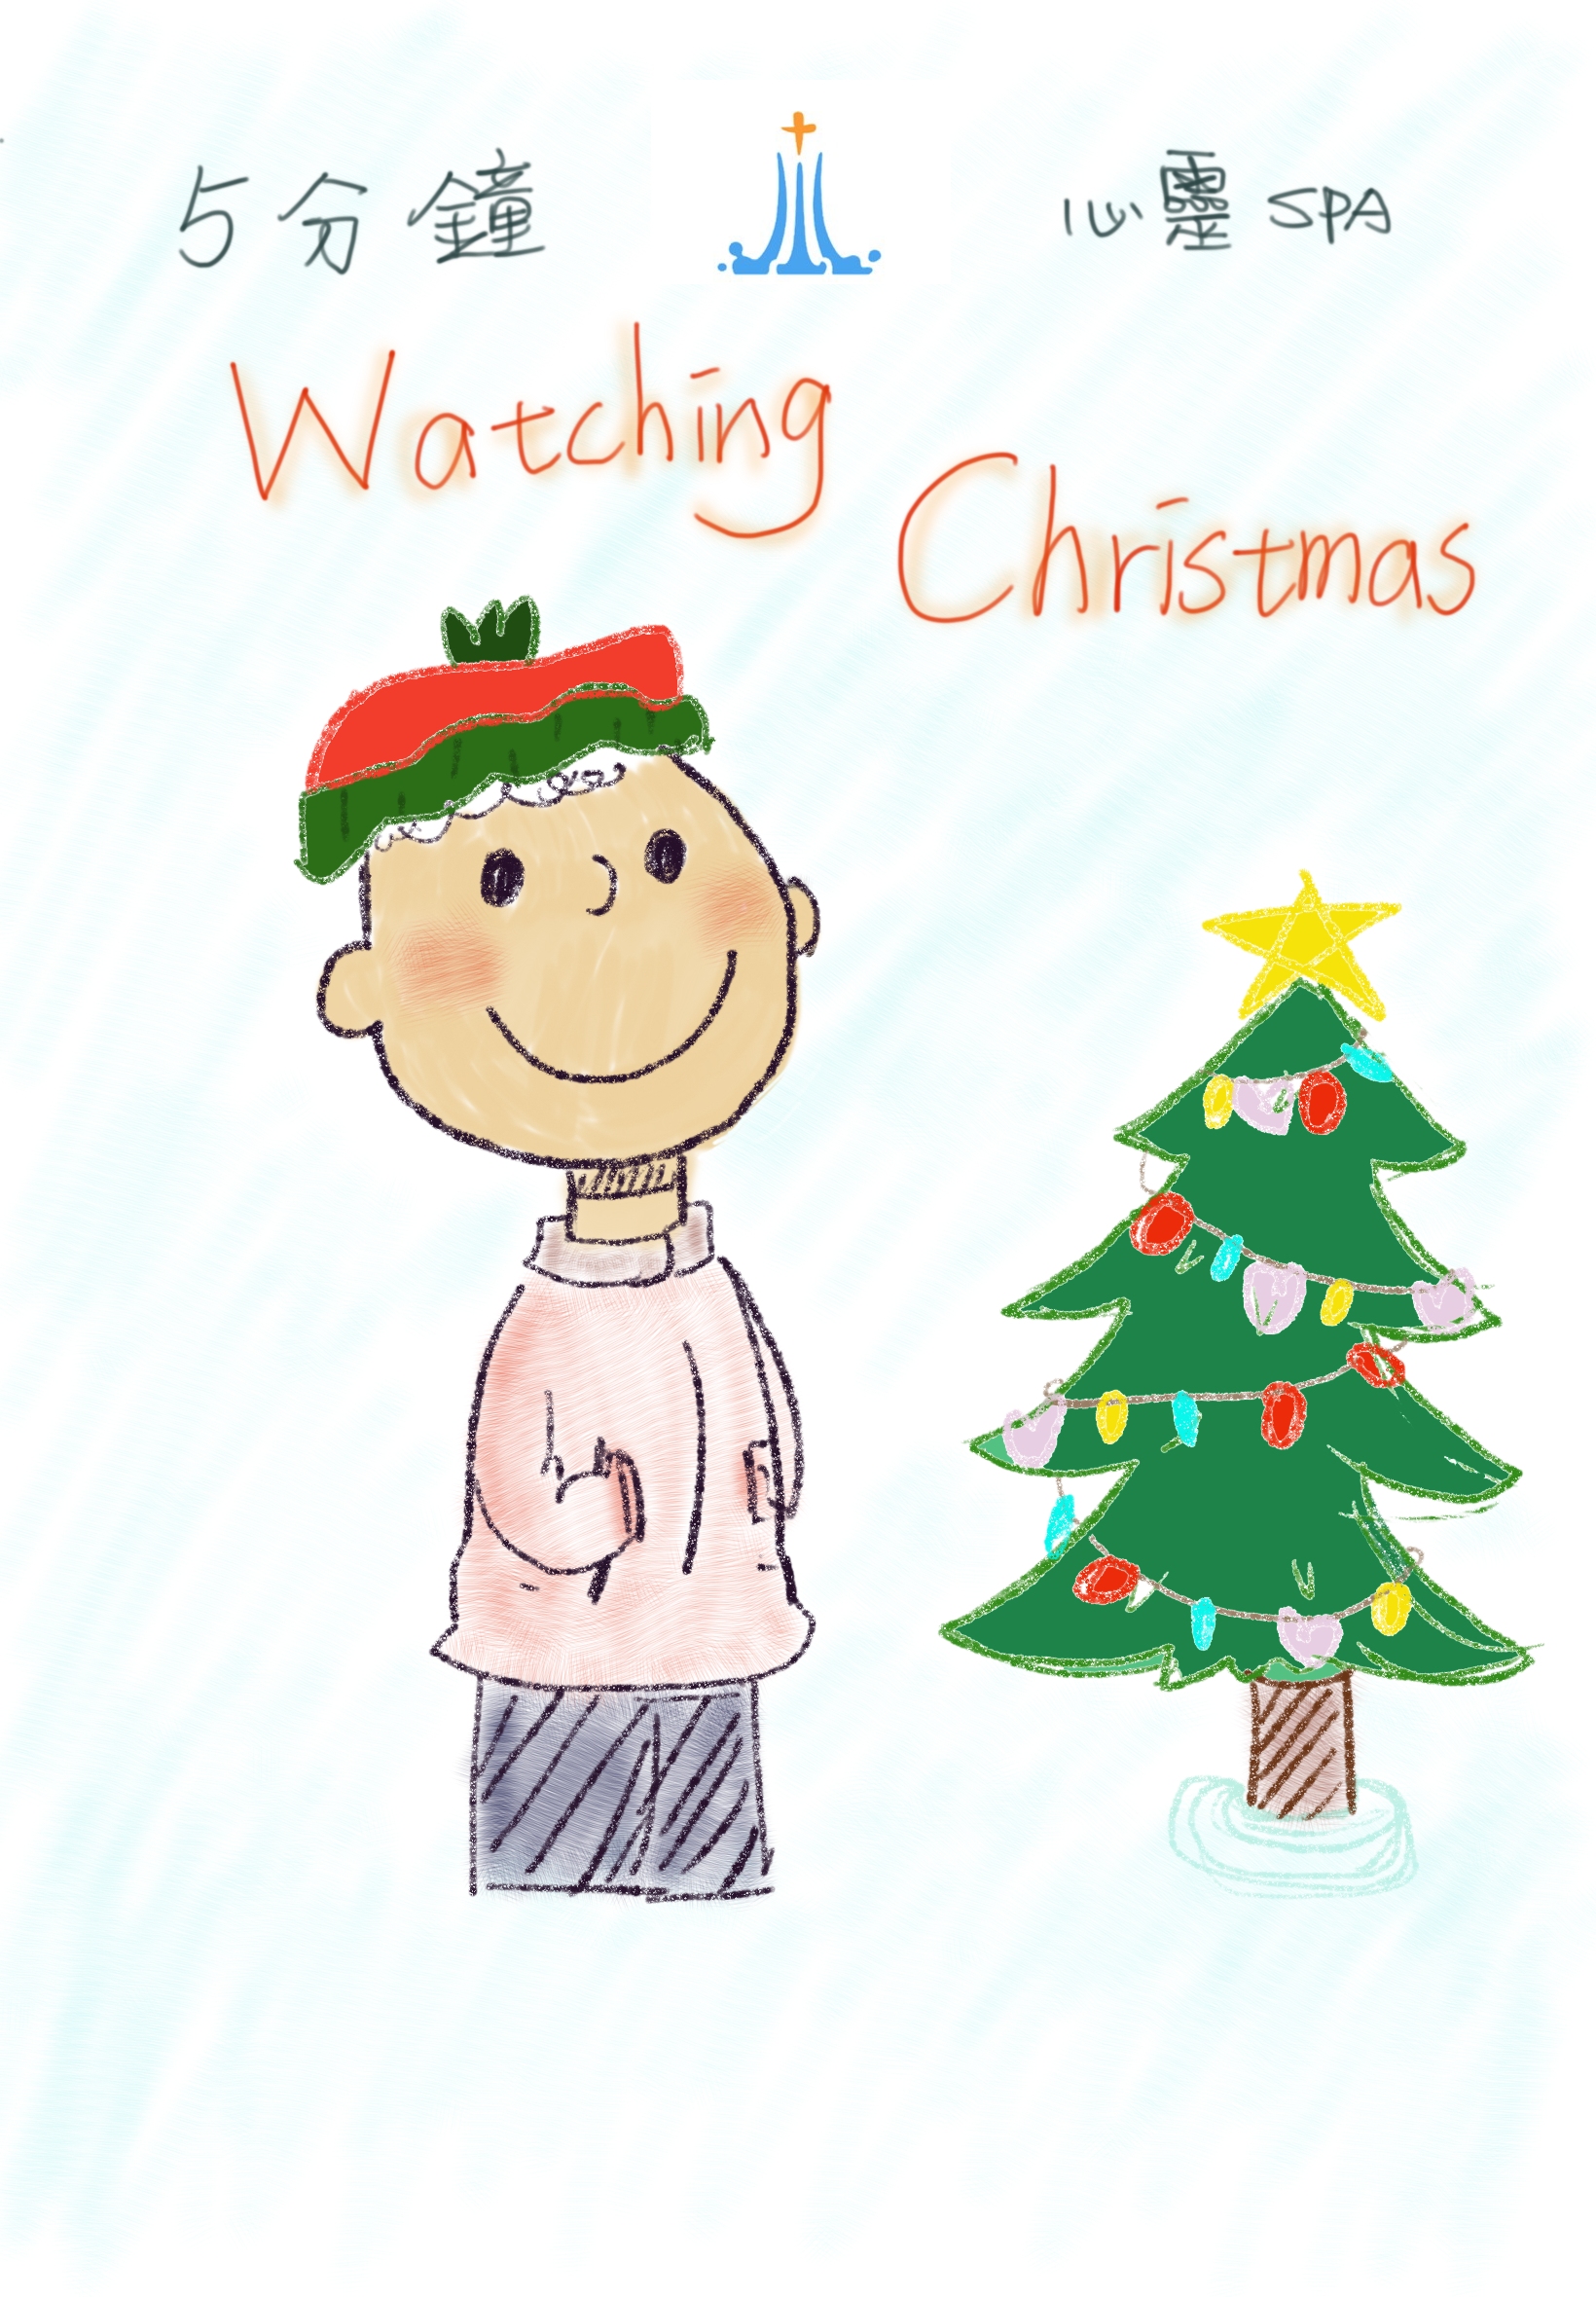 2021/12/27『Watching Christmas』